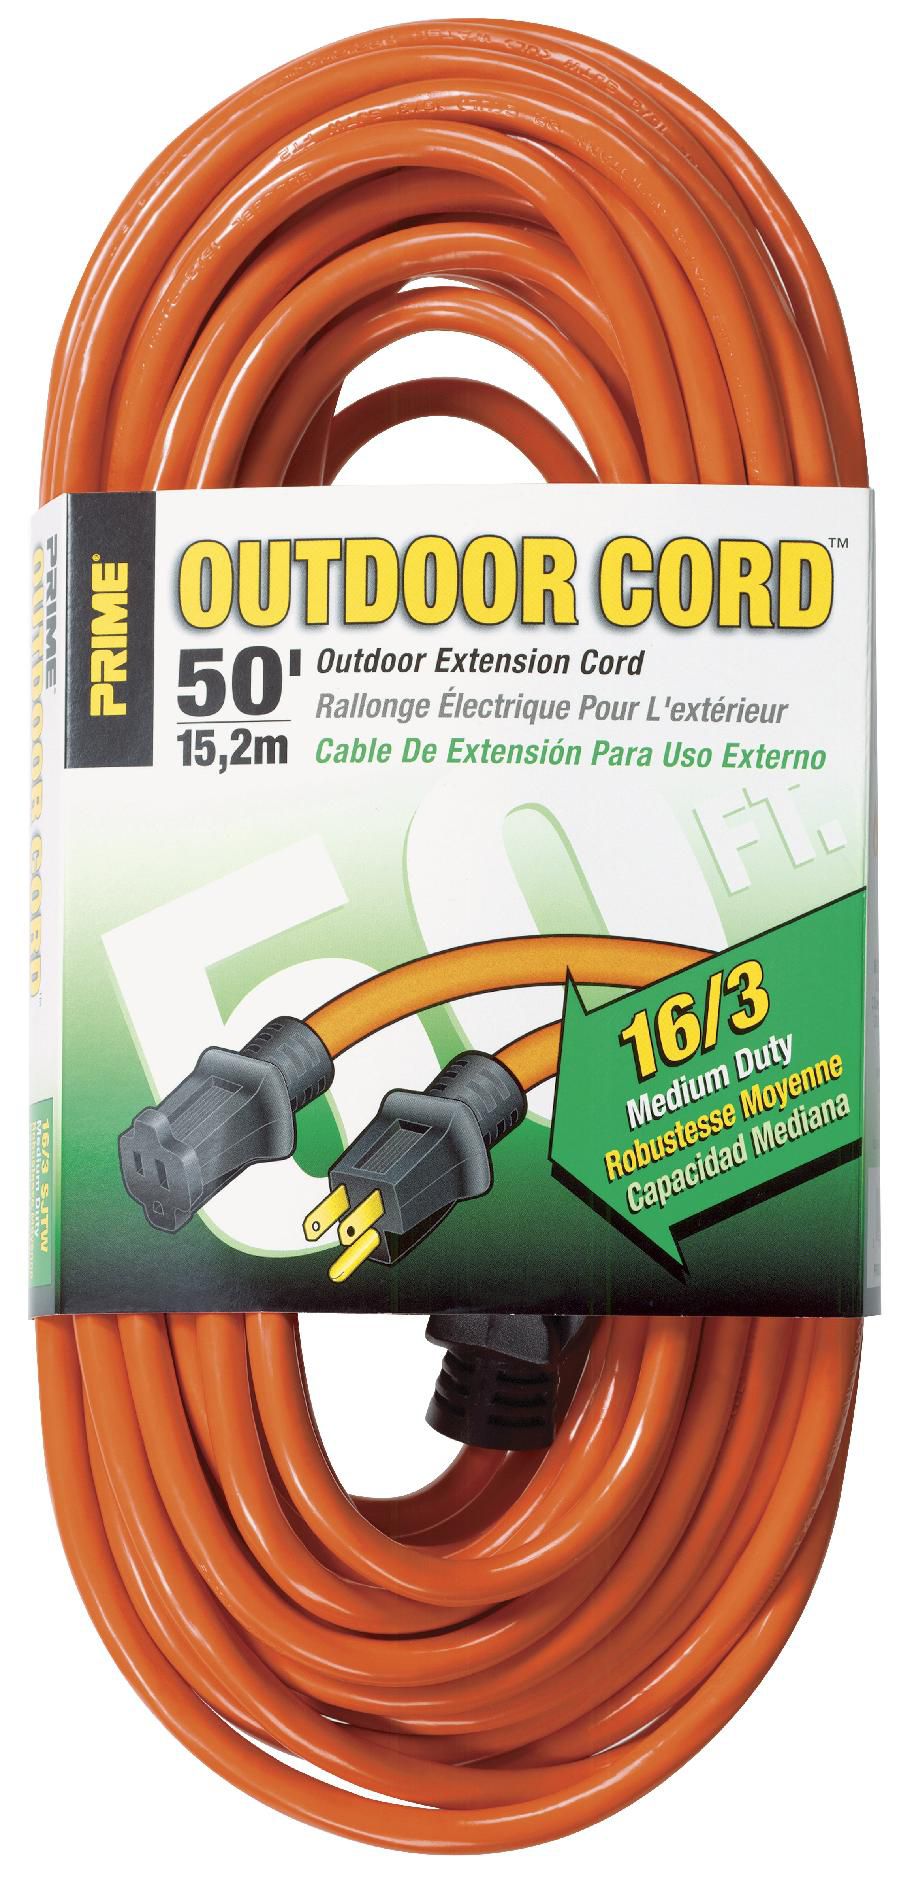 Prime Wire & Cable EC501630 50-Foot 16/3 SJTW Medium Duty Extension Cord, Orange